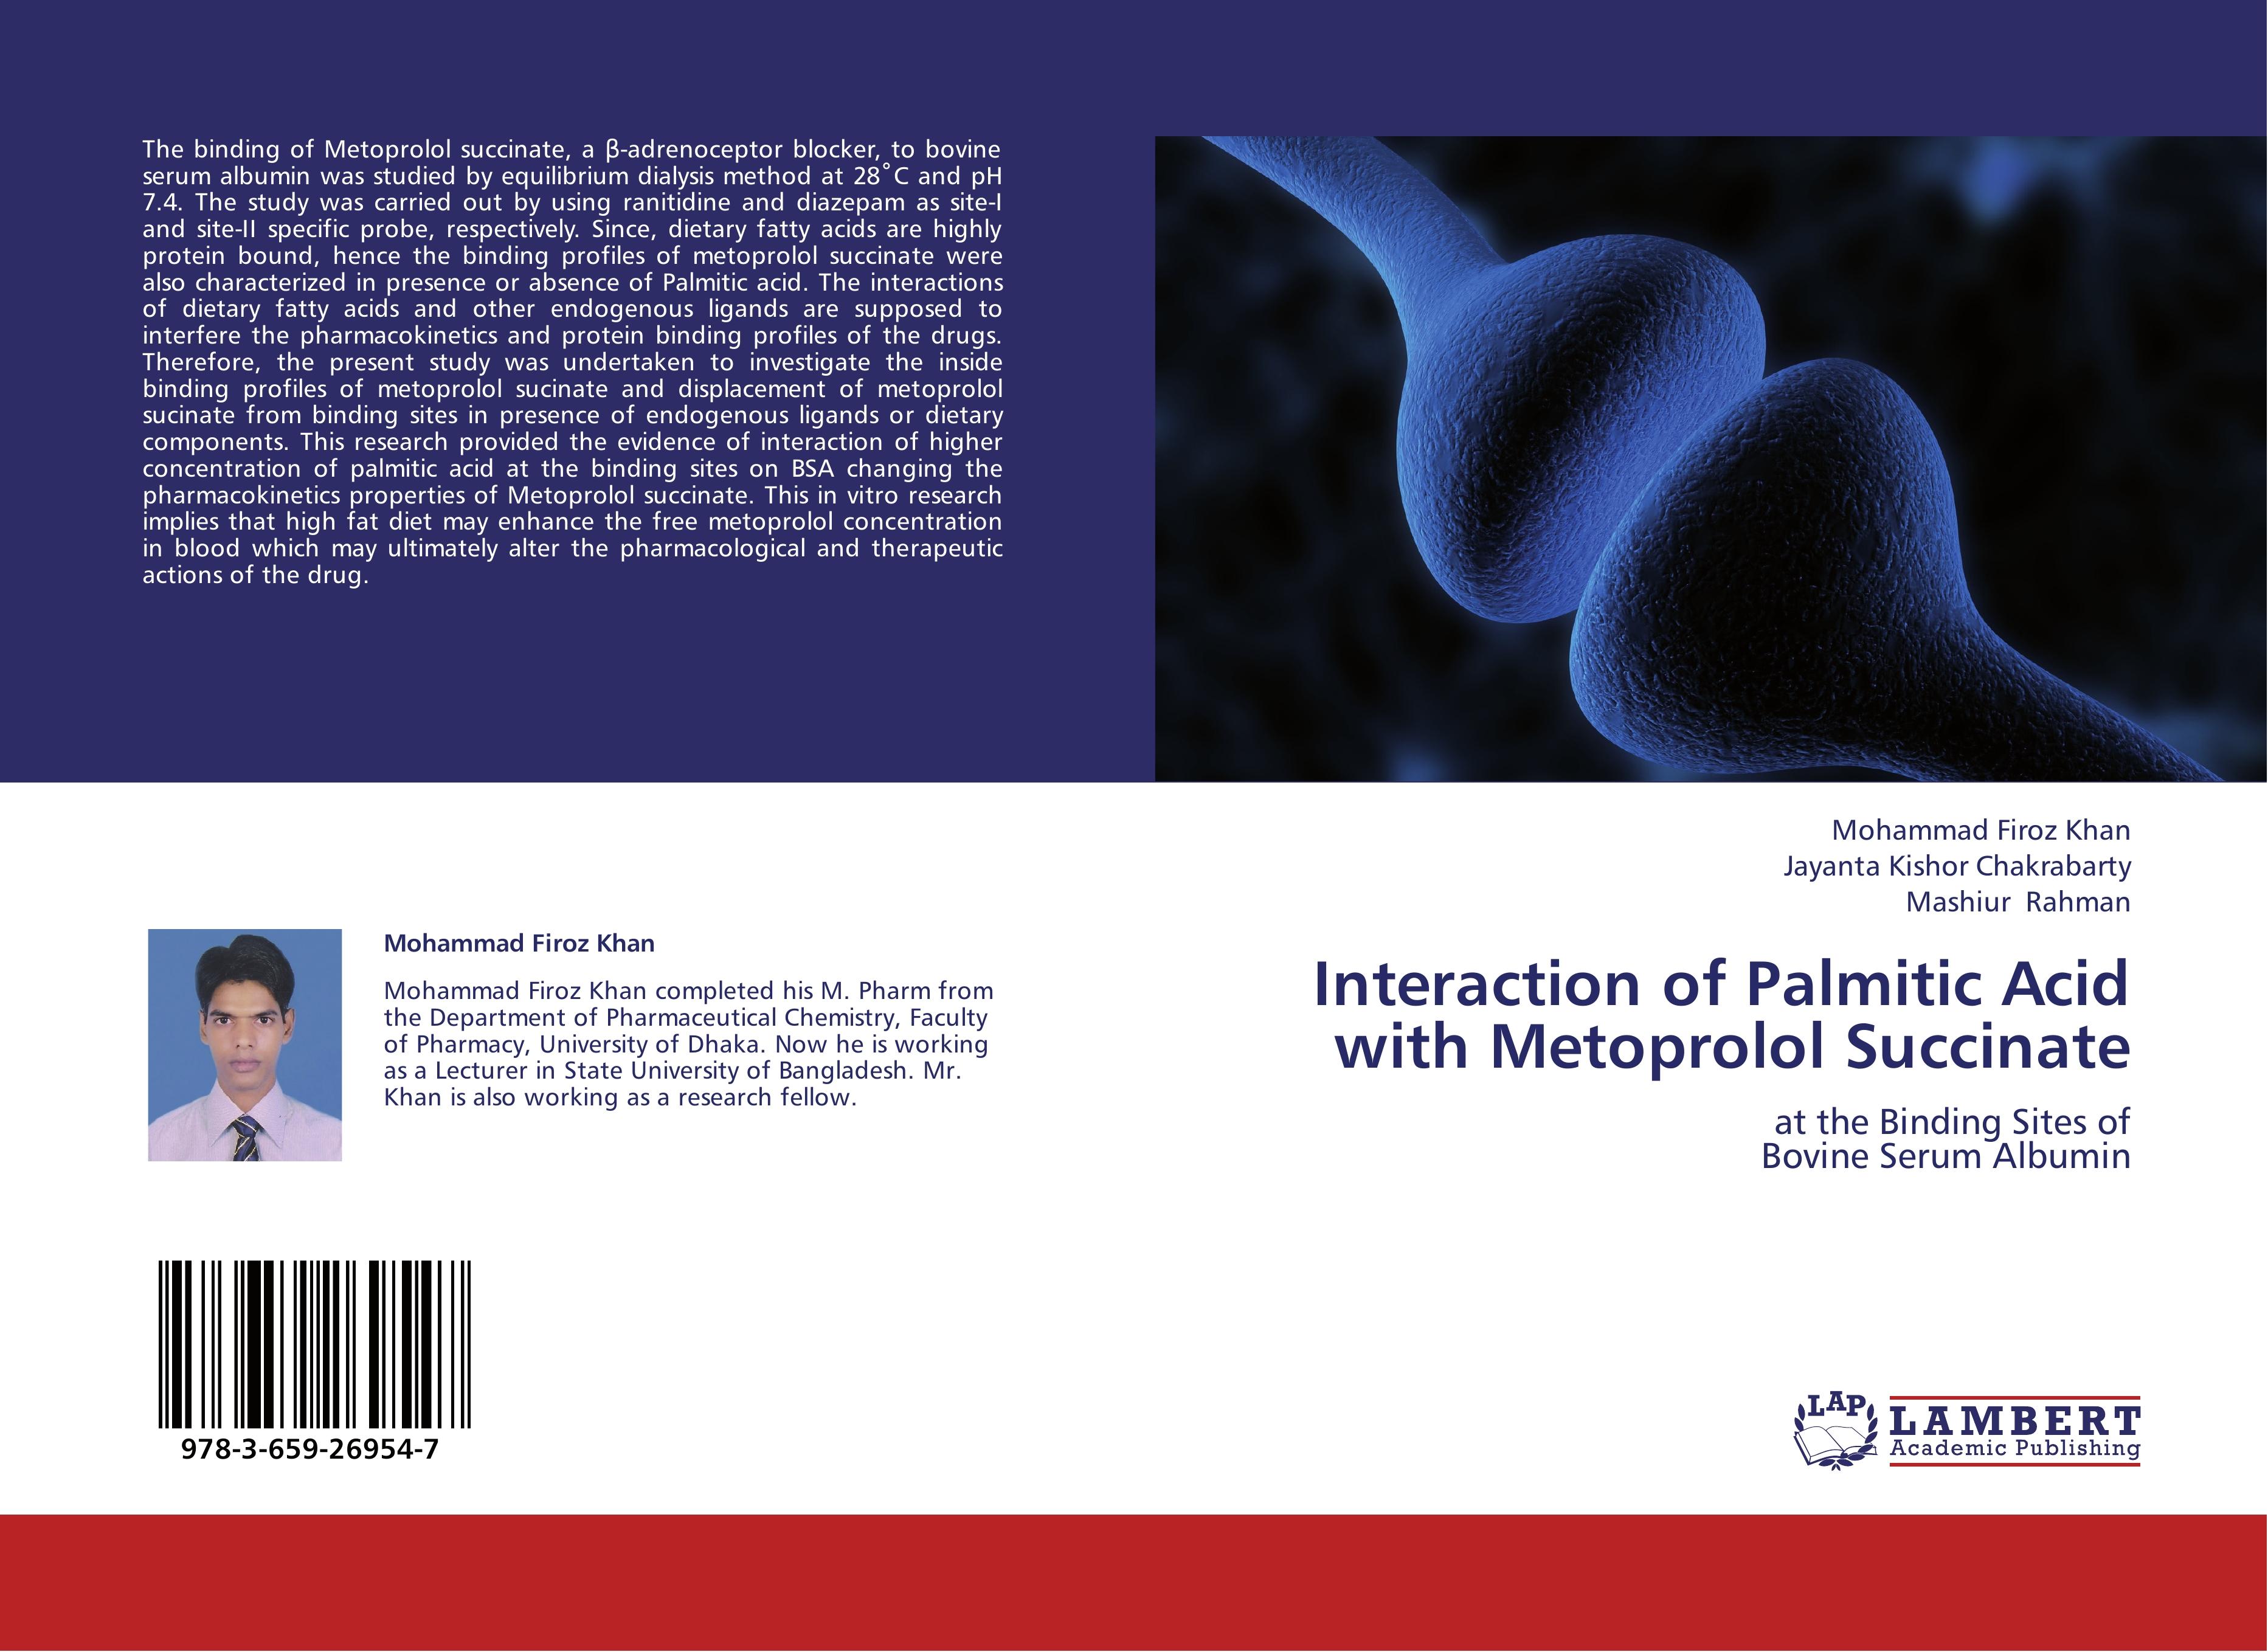 Interaction of Palmitic Acid with Metoprolol Succinate - Mohammad Firoz Khan Jayanta Kishor chakrabarty Mashiur Rahman